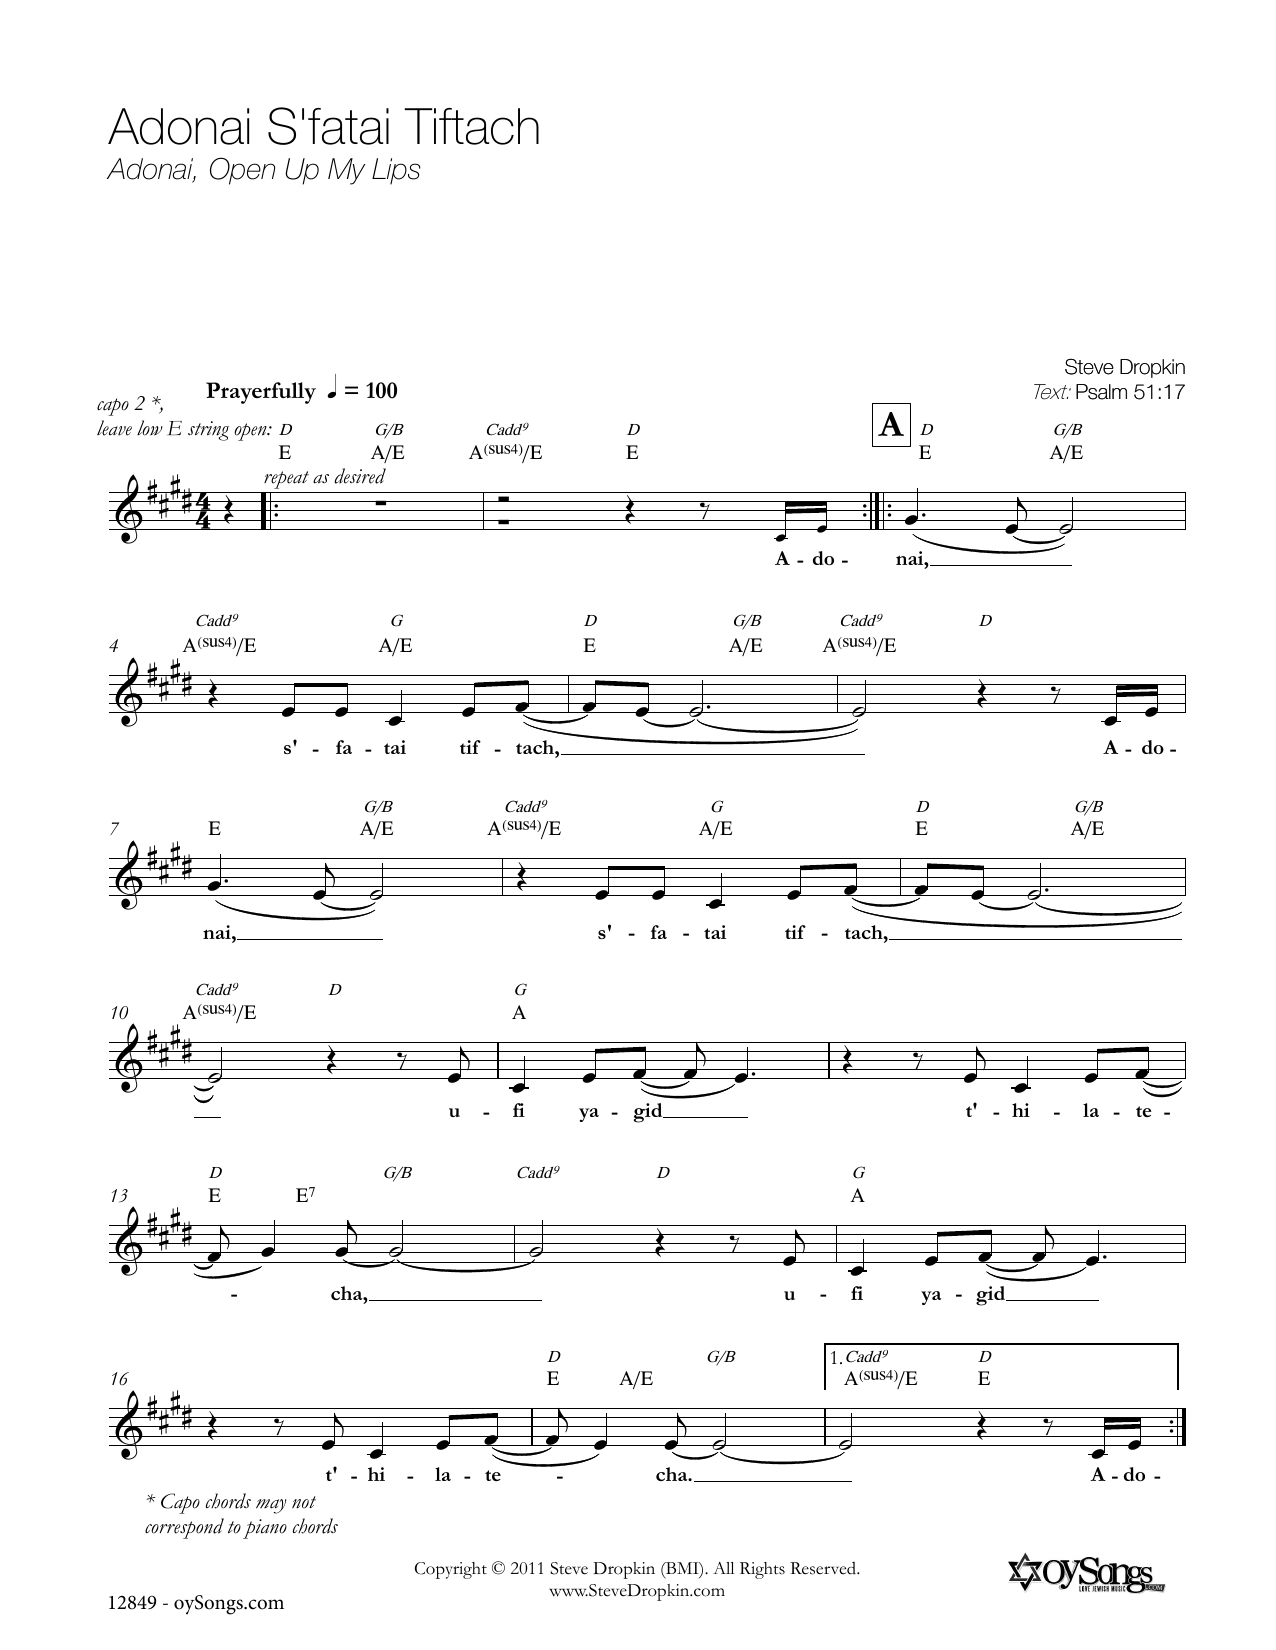 Steve Dropkin Adonai S'fatai Tiftach sheet music notes and chords arranged for Lead Sheet / Fake Book